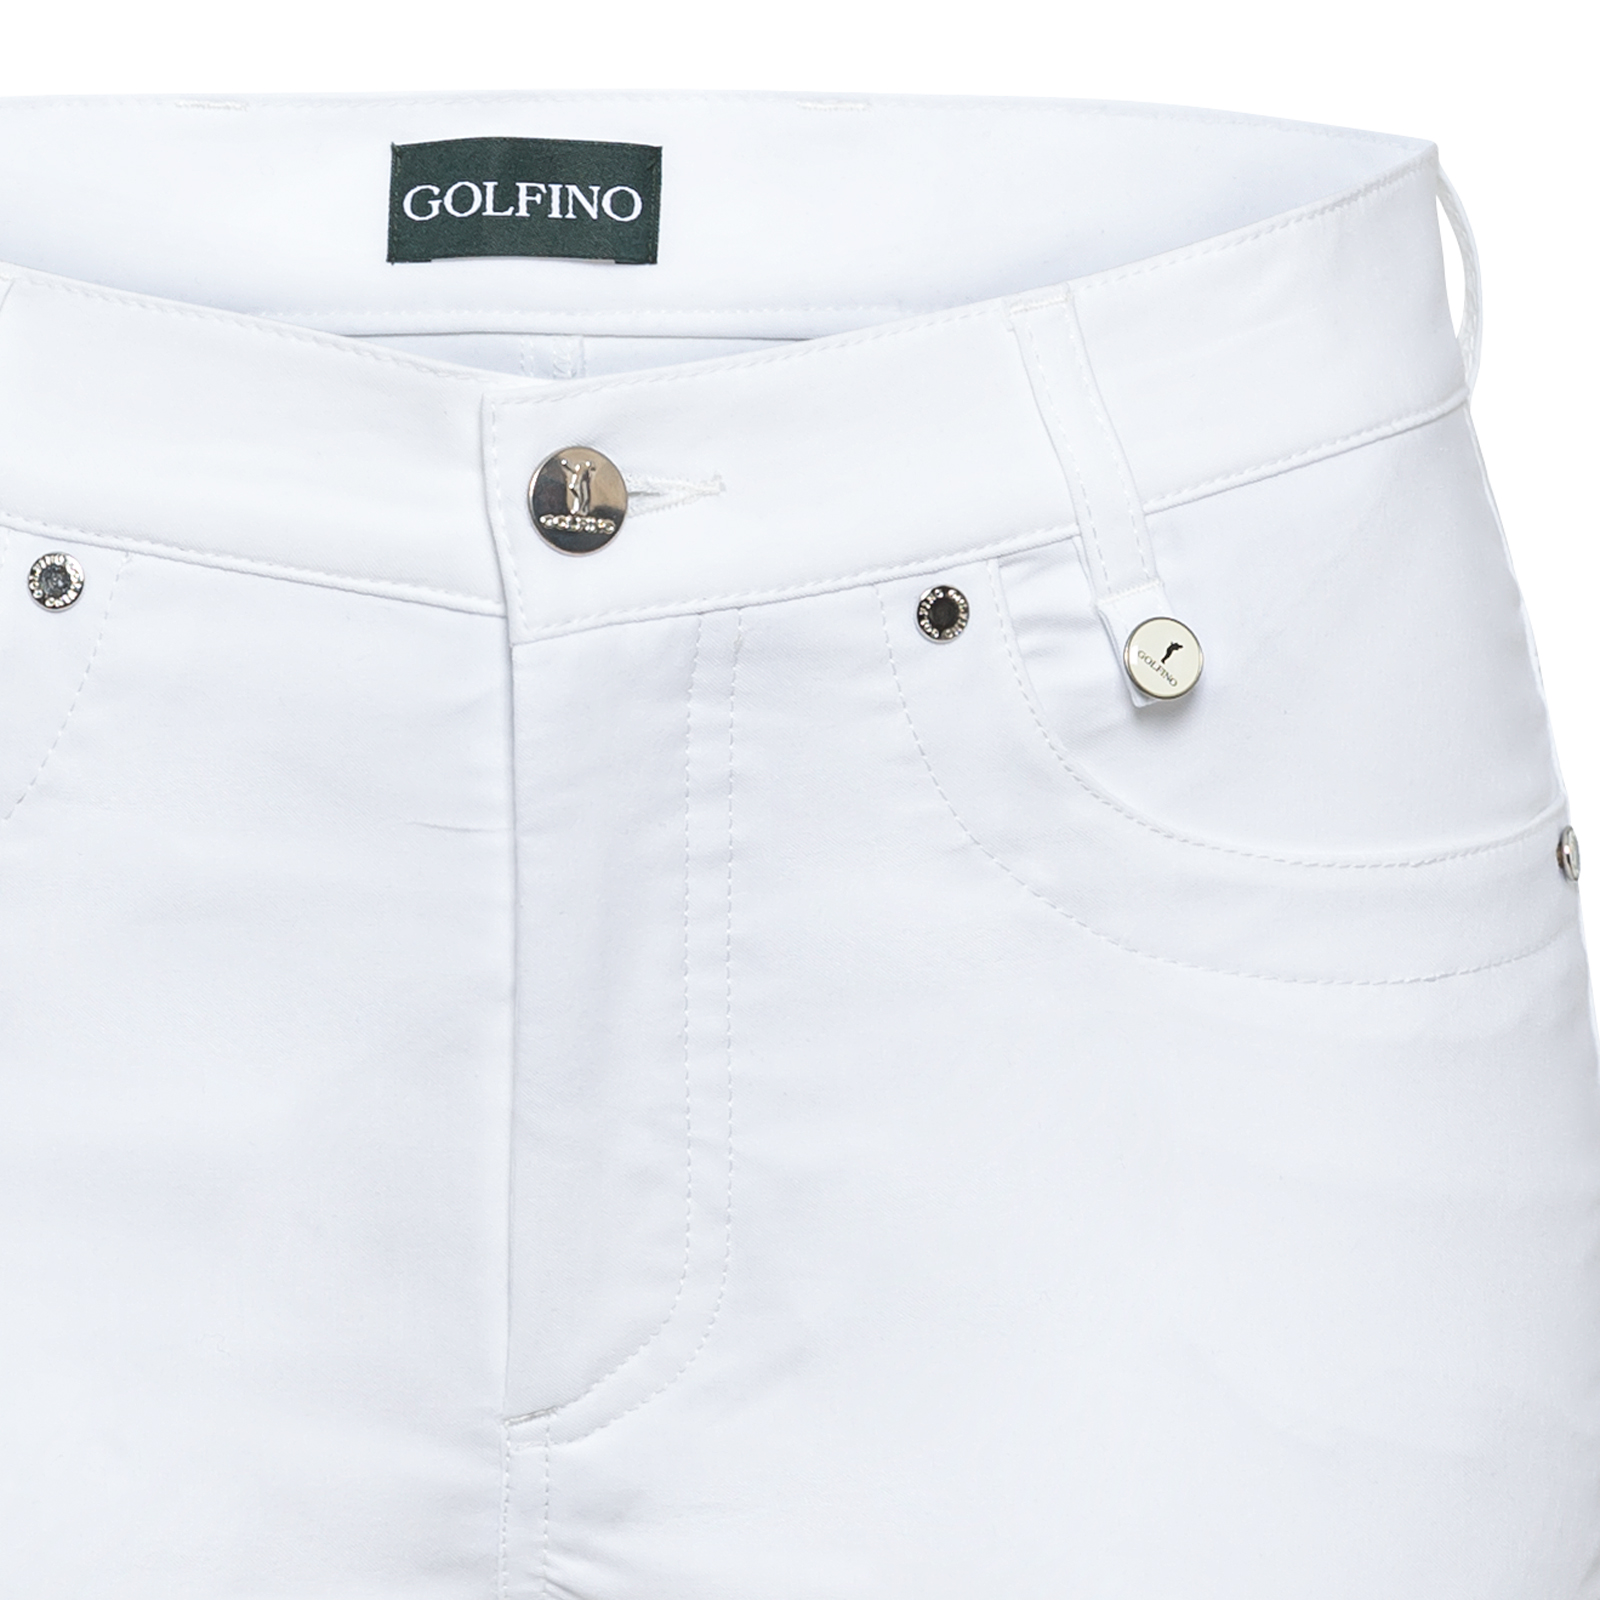 Ladies' lightweight stretch capri-style golf trousers